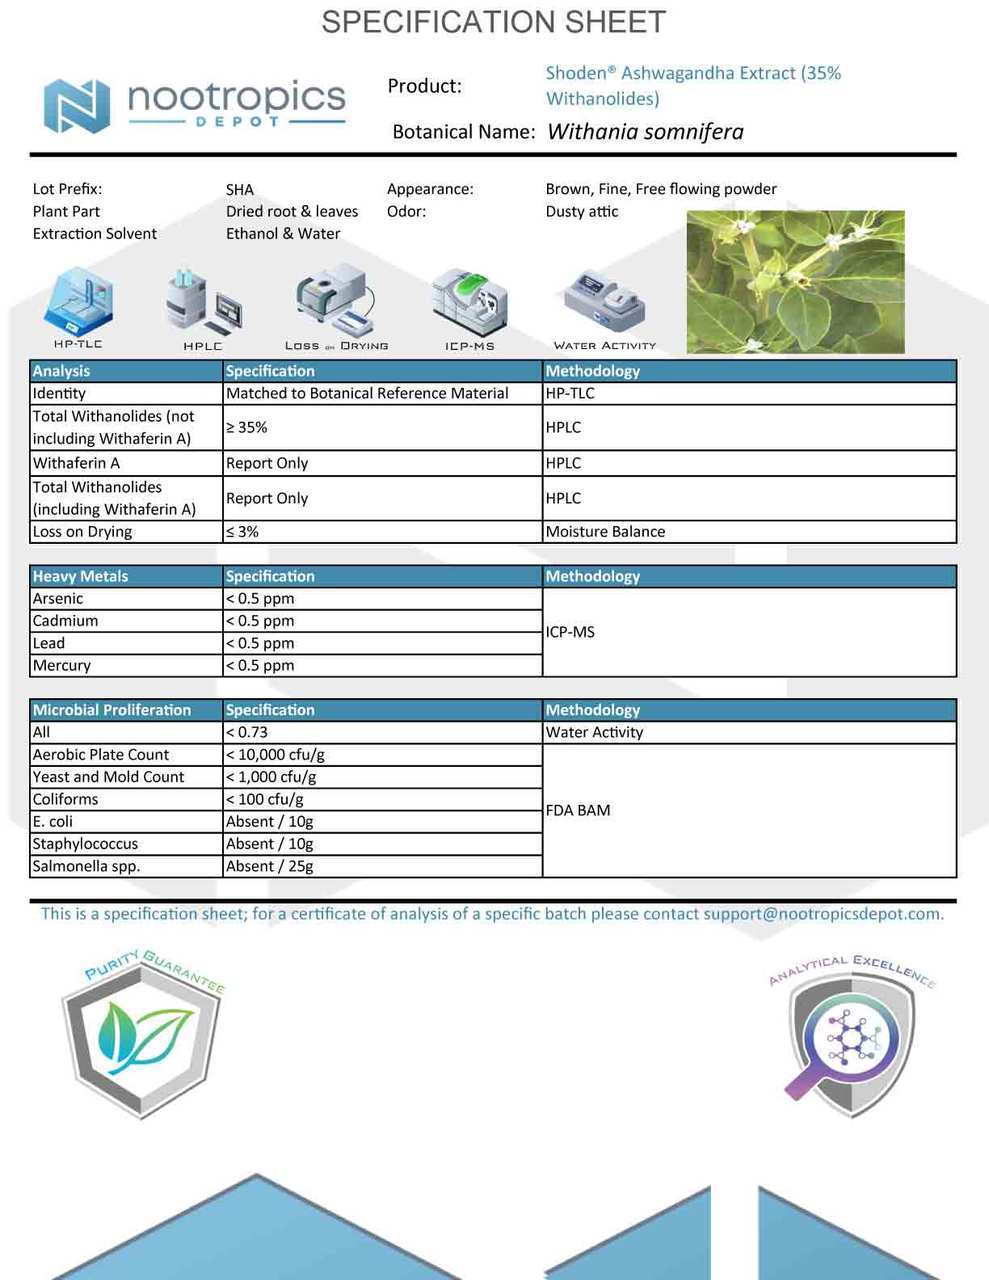 Shoden Ashwagandha Specification Sheet